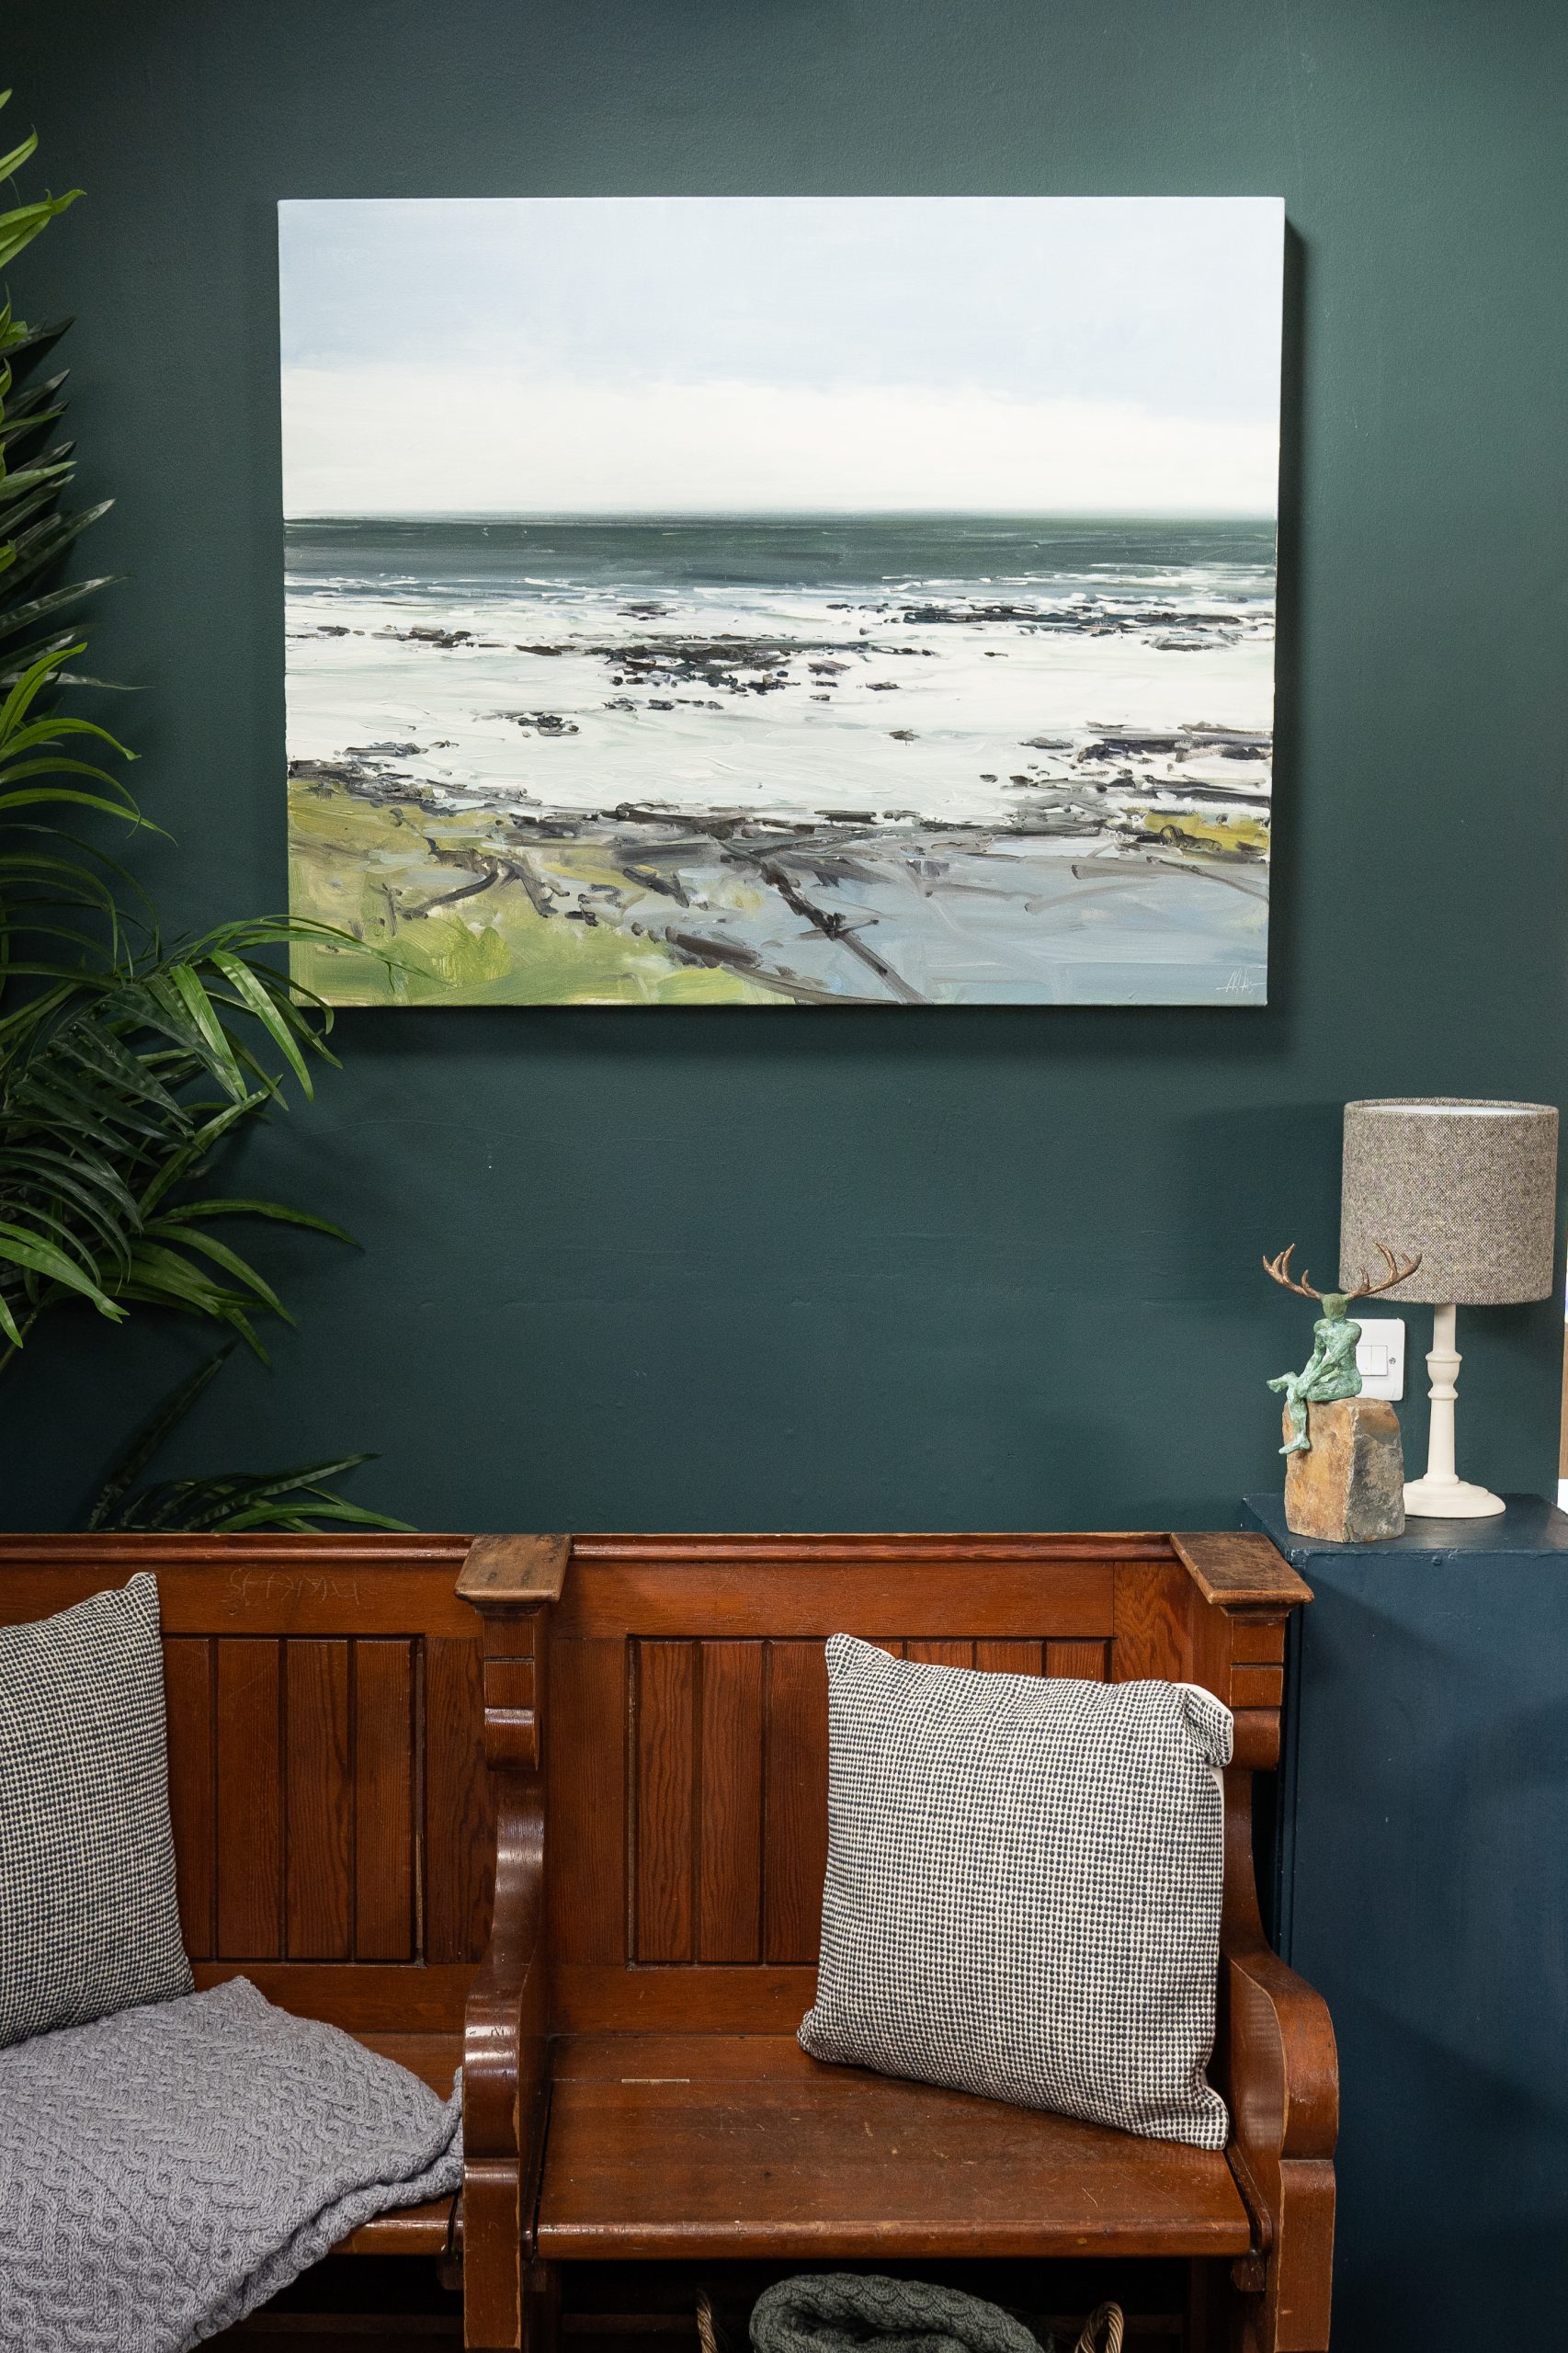 Kaye Maahs original oil painting oil on canvas contemporary art Irish gift wild atlantic way beautiful interiors house home office design decor gift